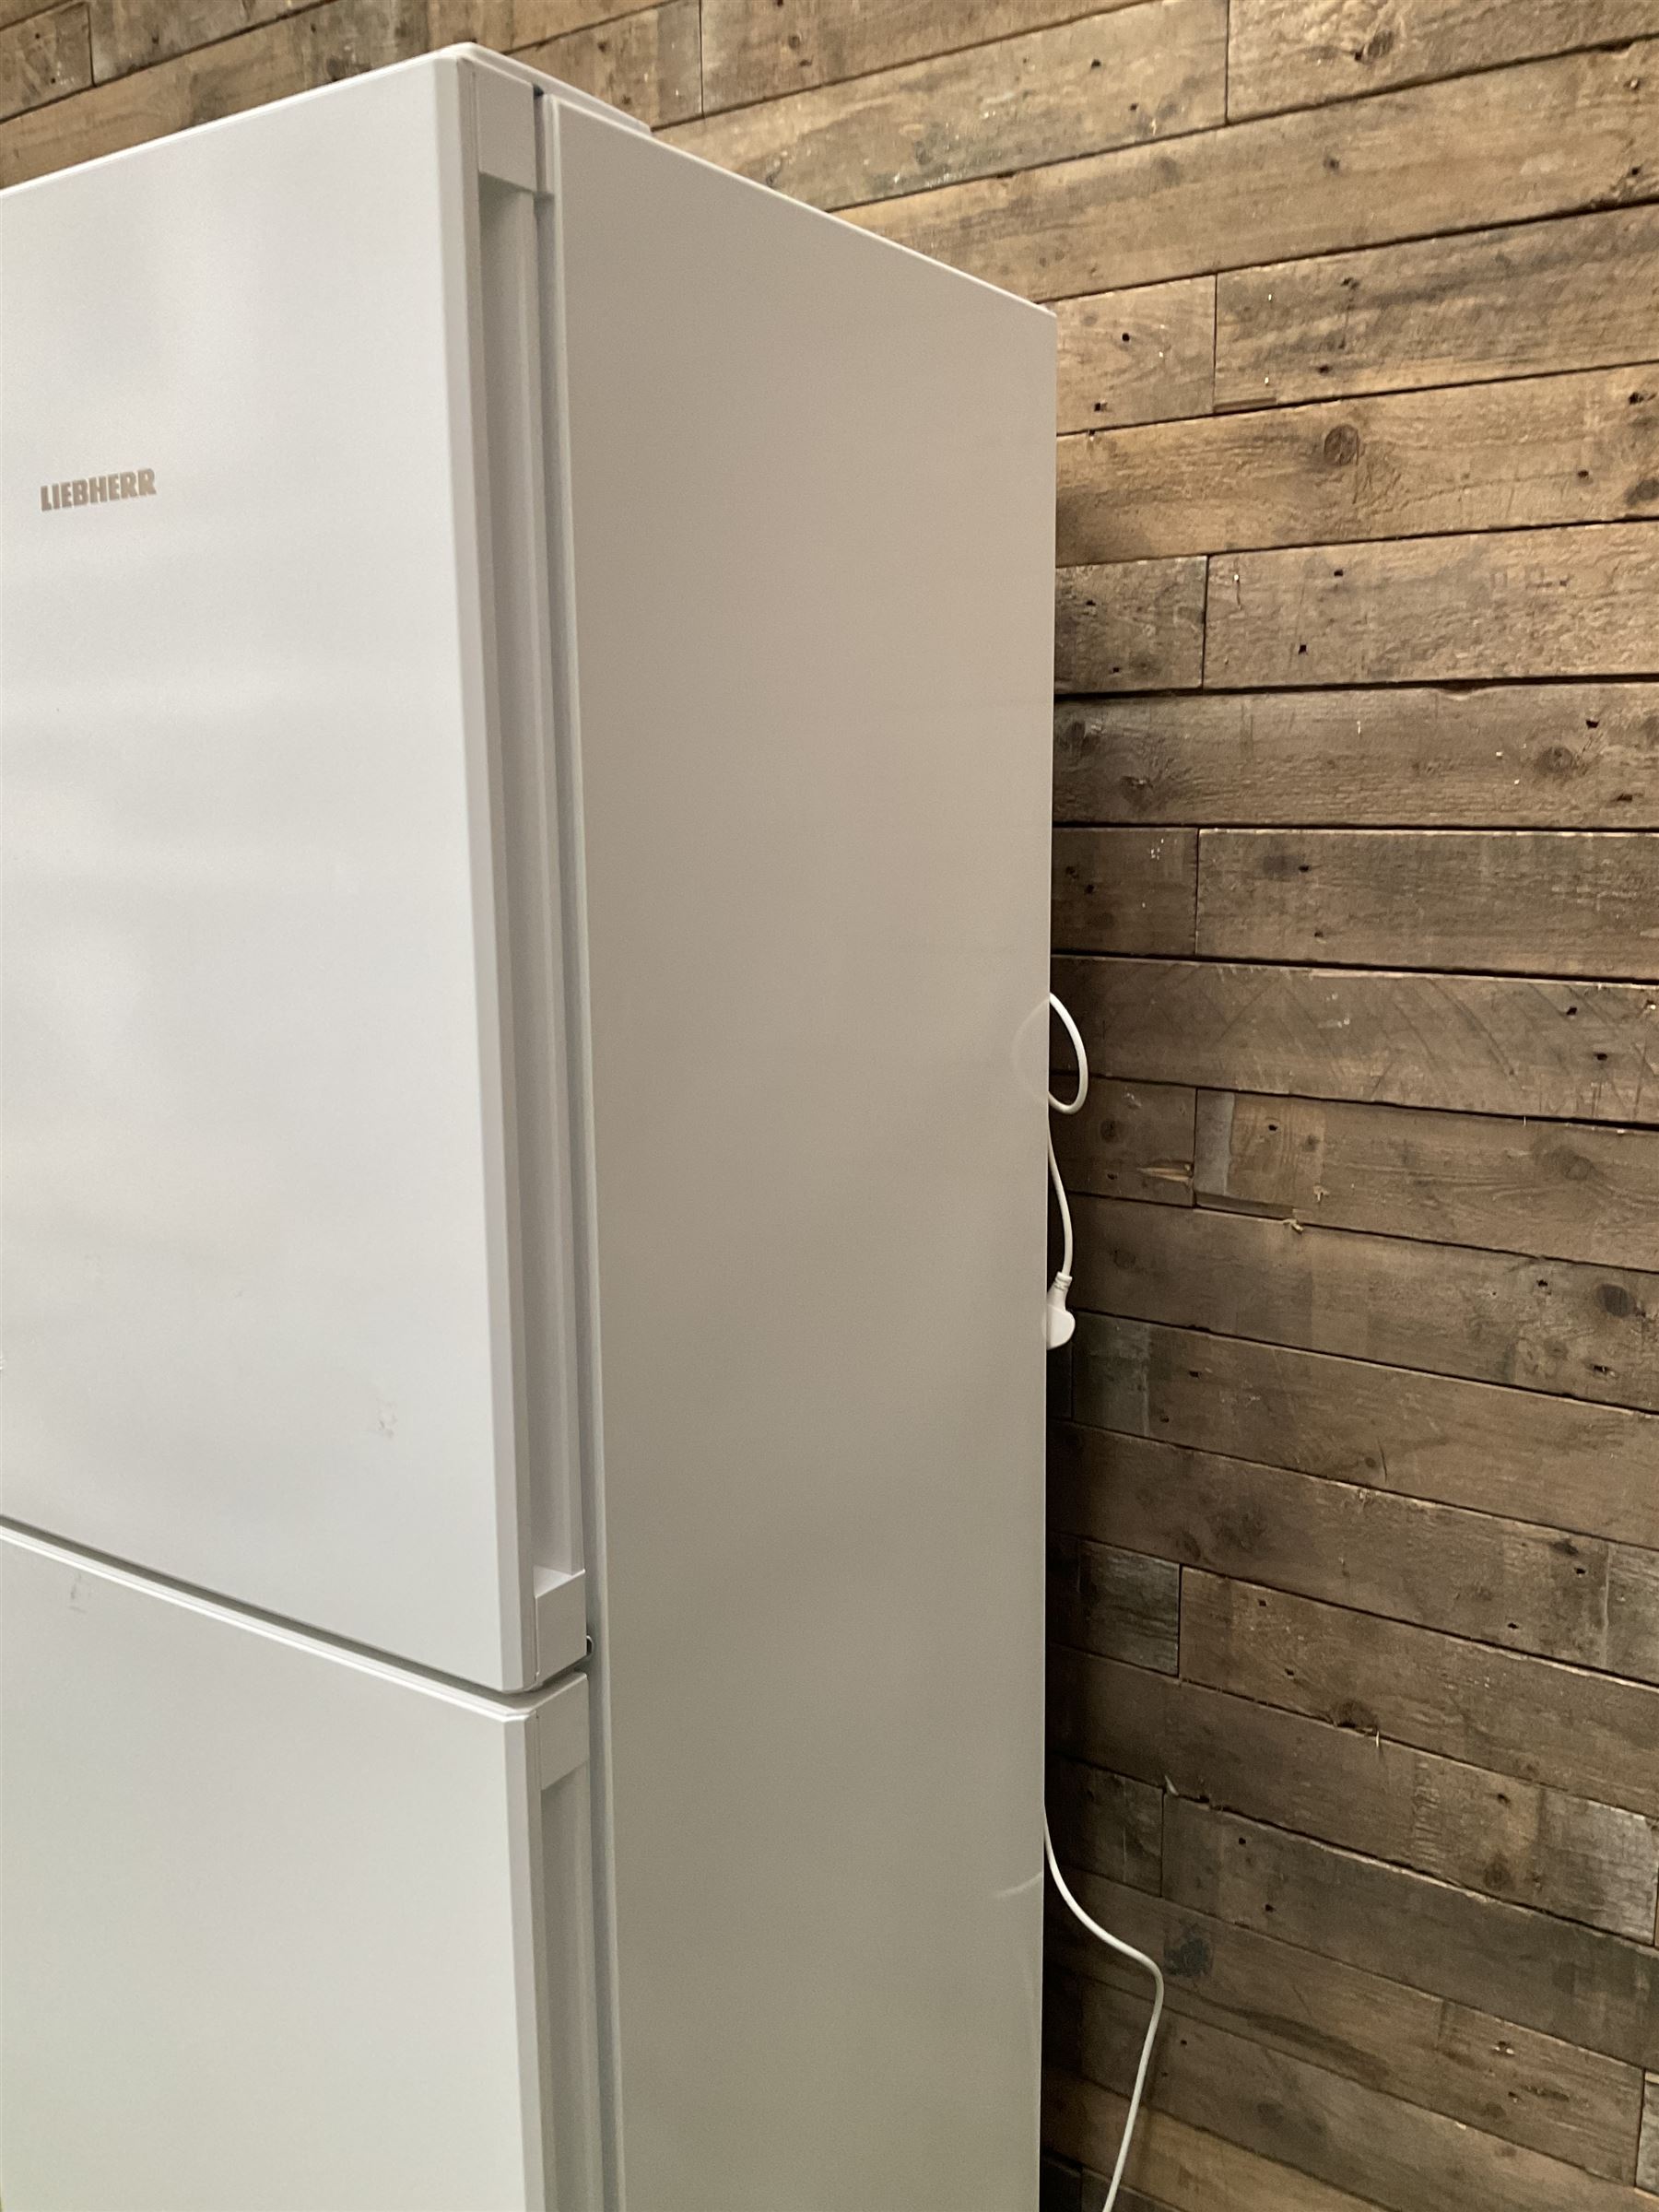 Liebherr SN-T 960214 fridge freezer in white - Image 3 of 5